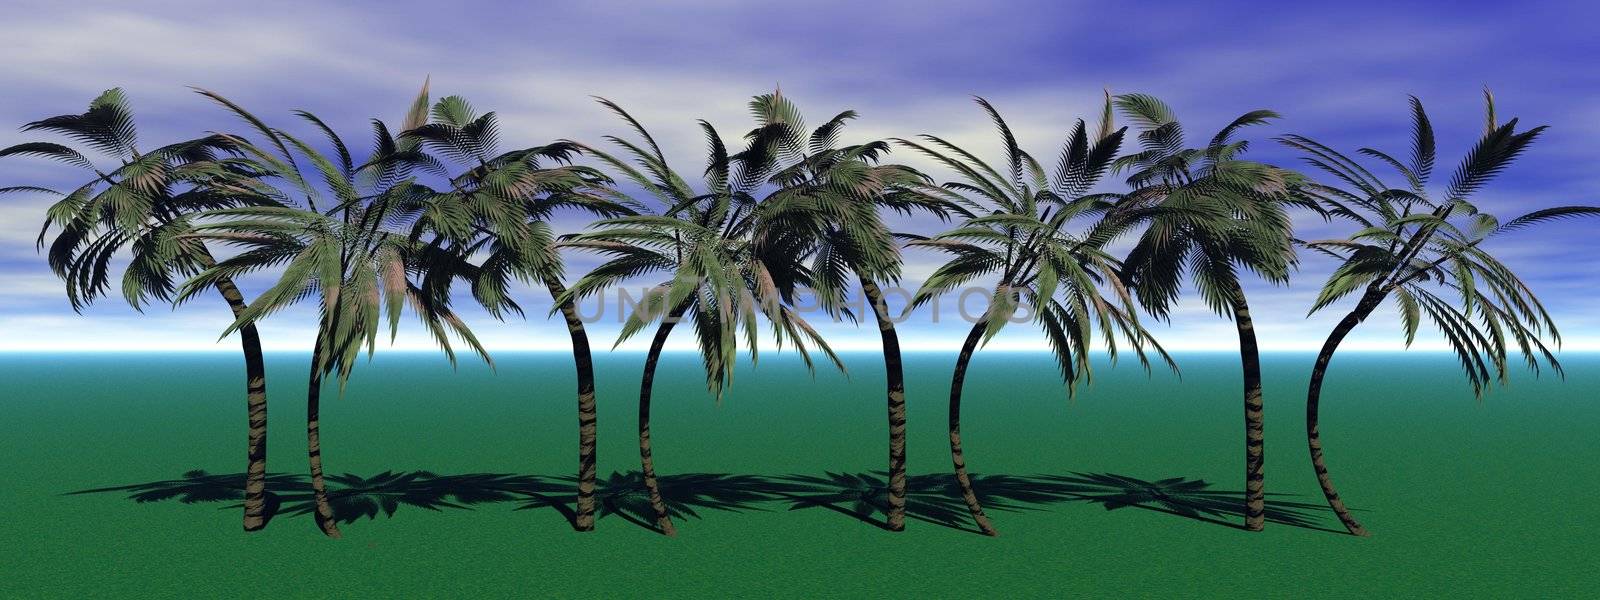 palms and sky blue